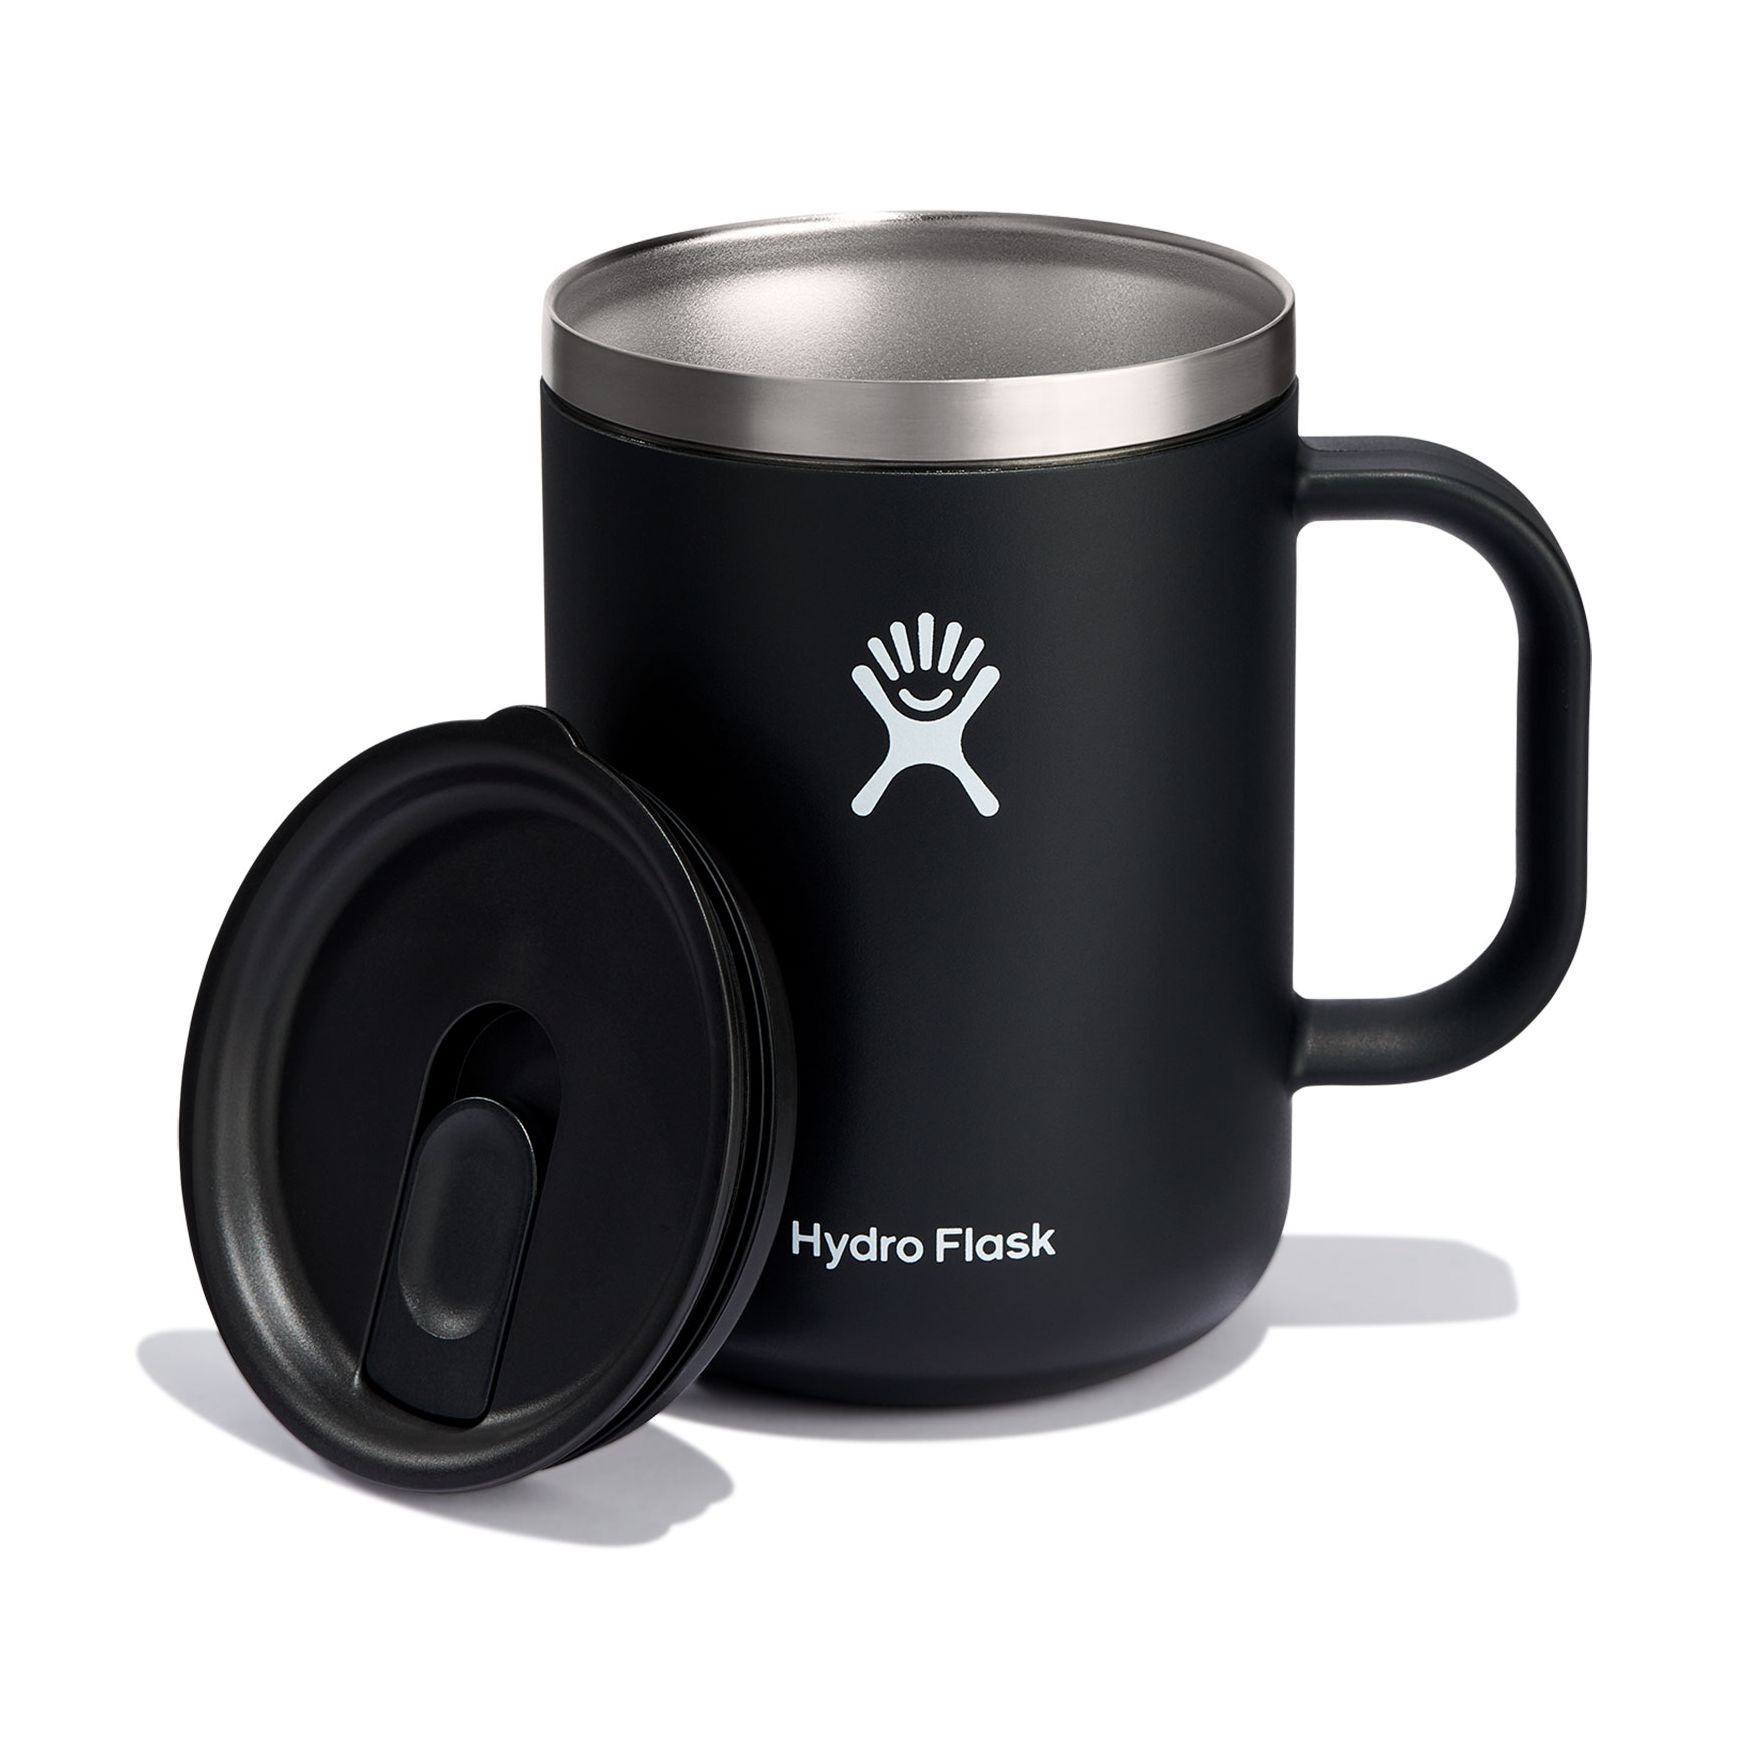 https://www.go2marine.com/item-images/563701-hydro-flask-24-oz-coffee-mug_Black-0.jpg